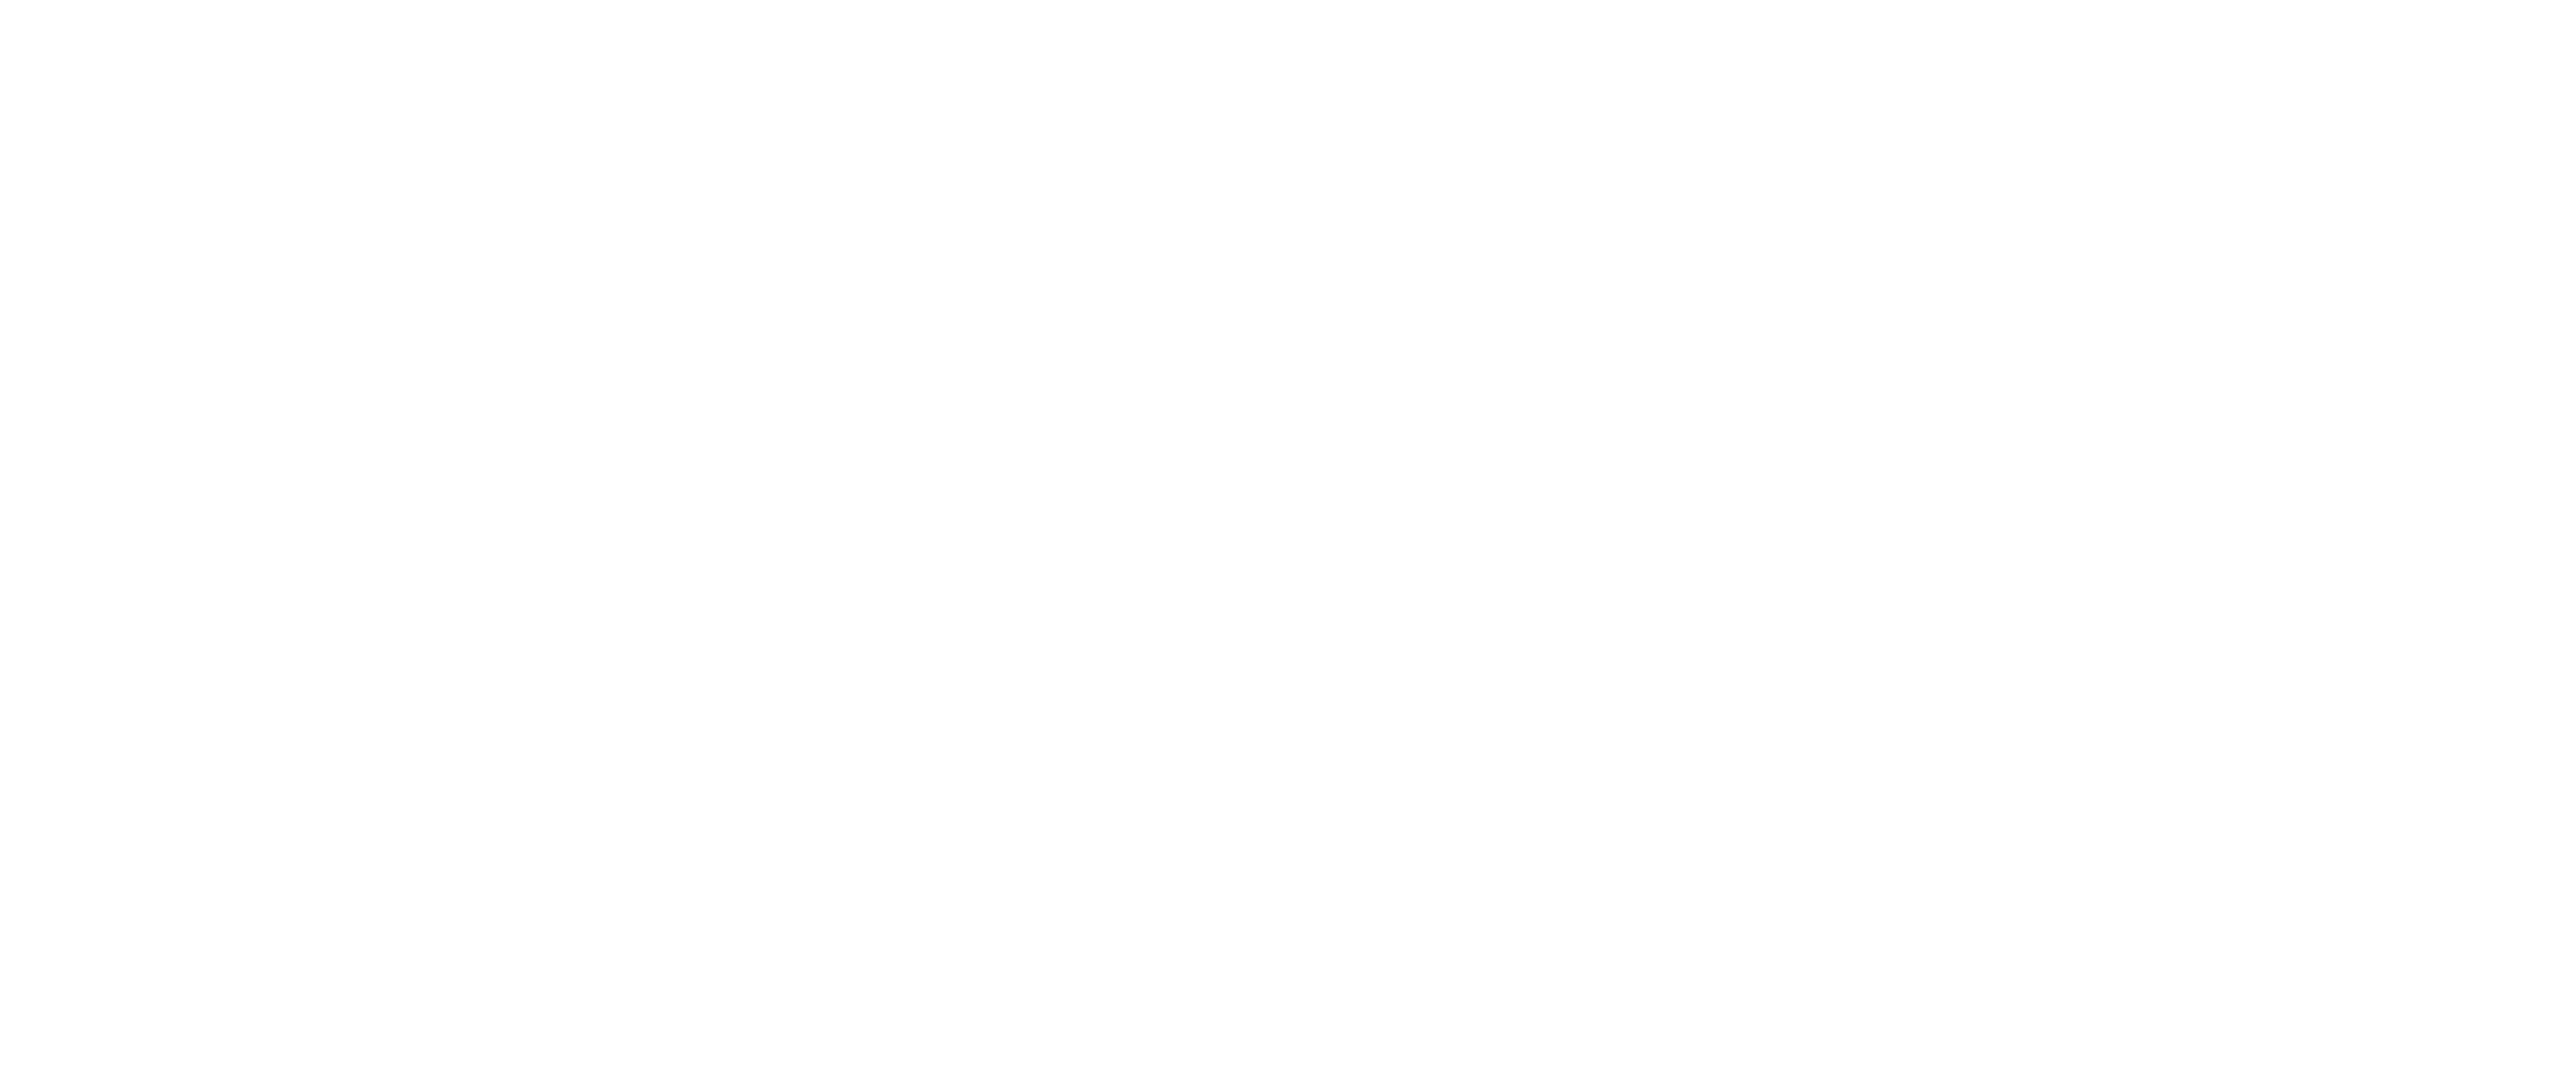 21st Century Storage white logo